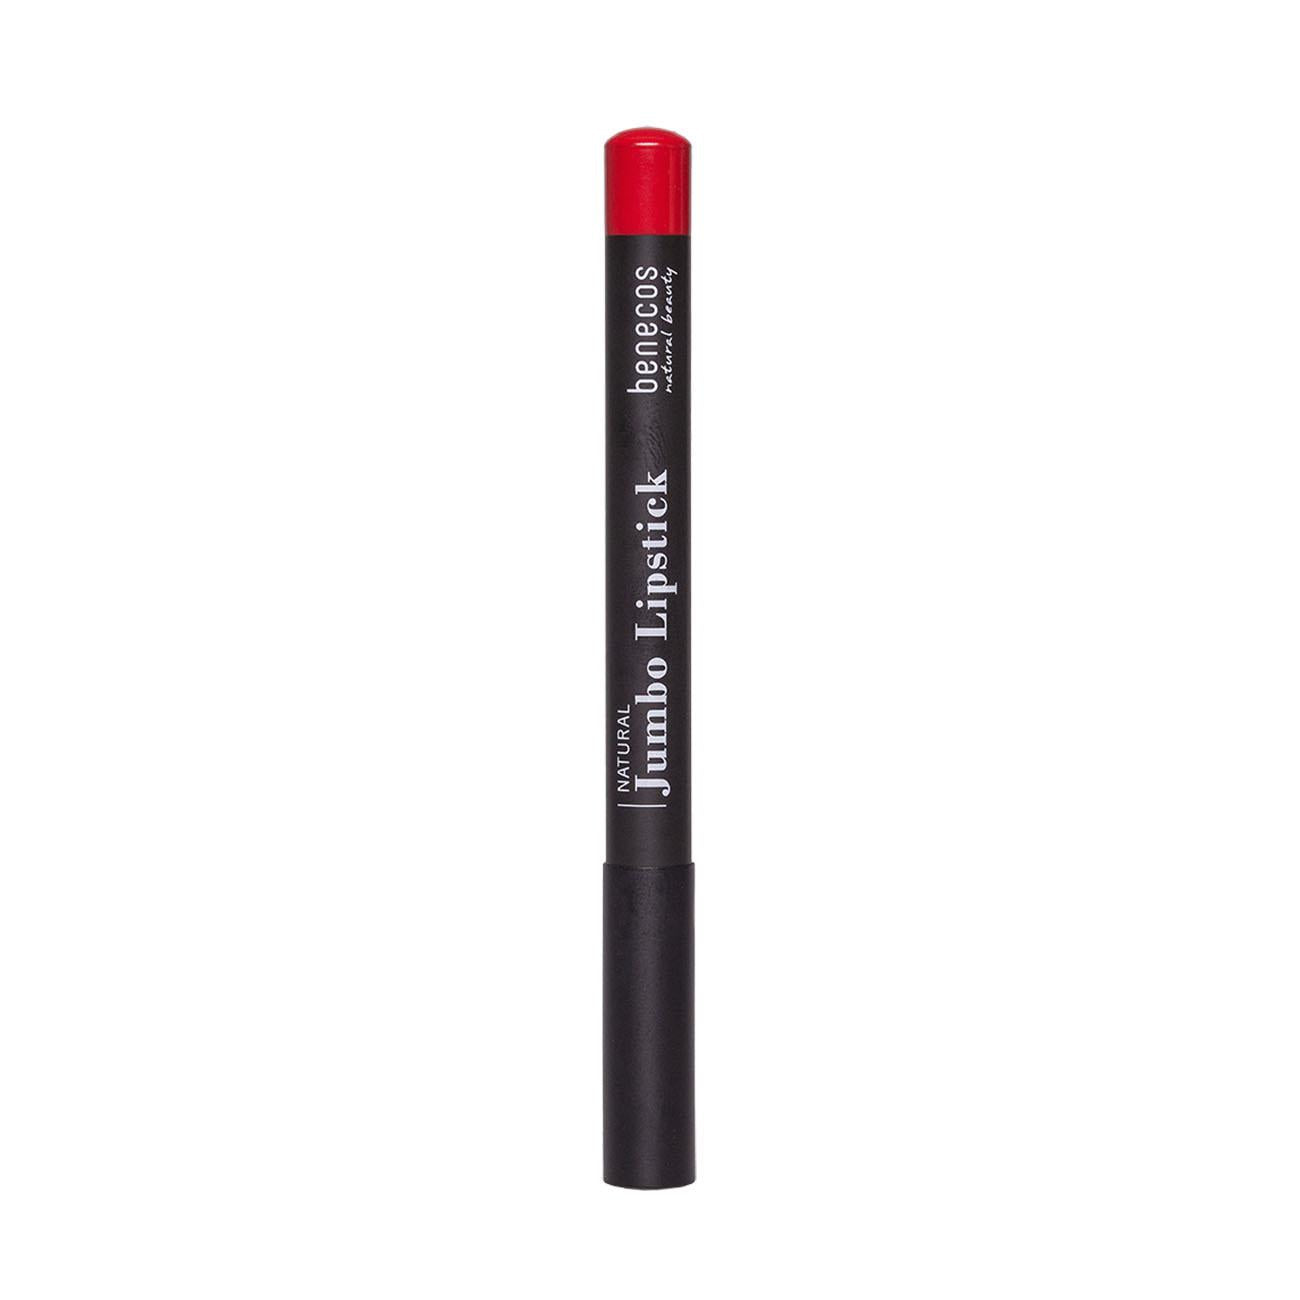 Jumbo Lipstick Cherry Lady 3g